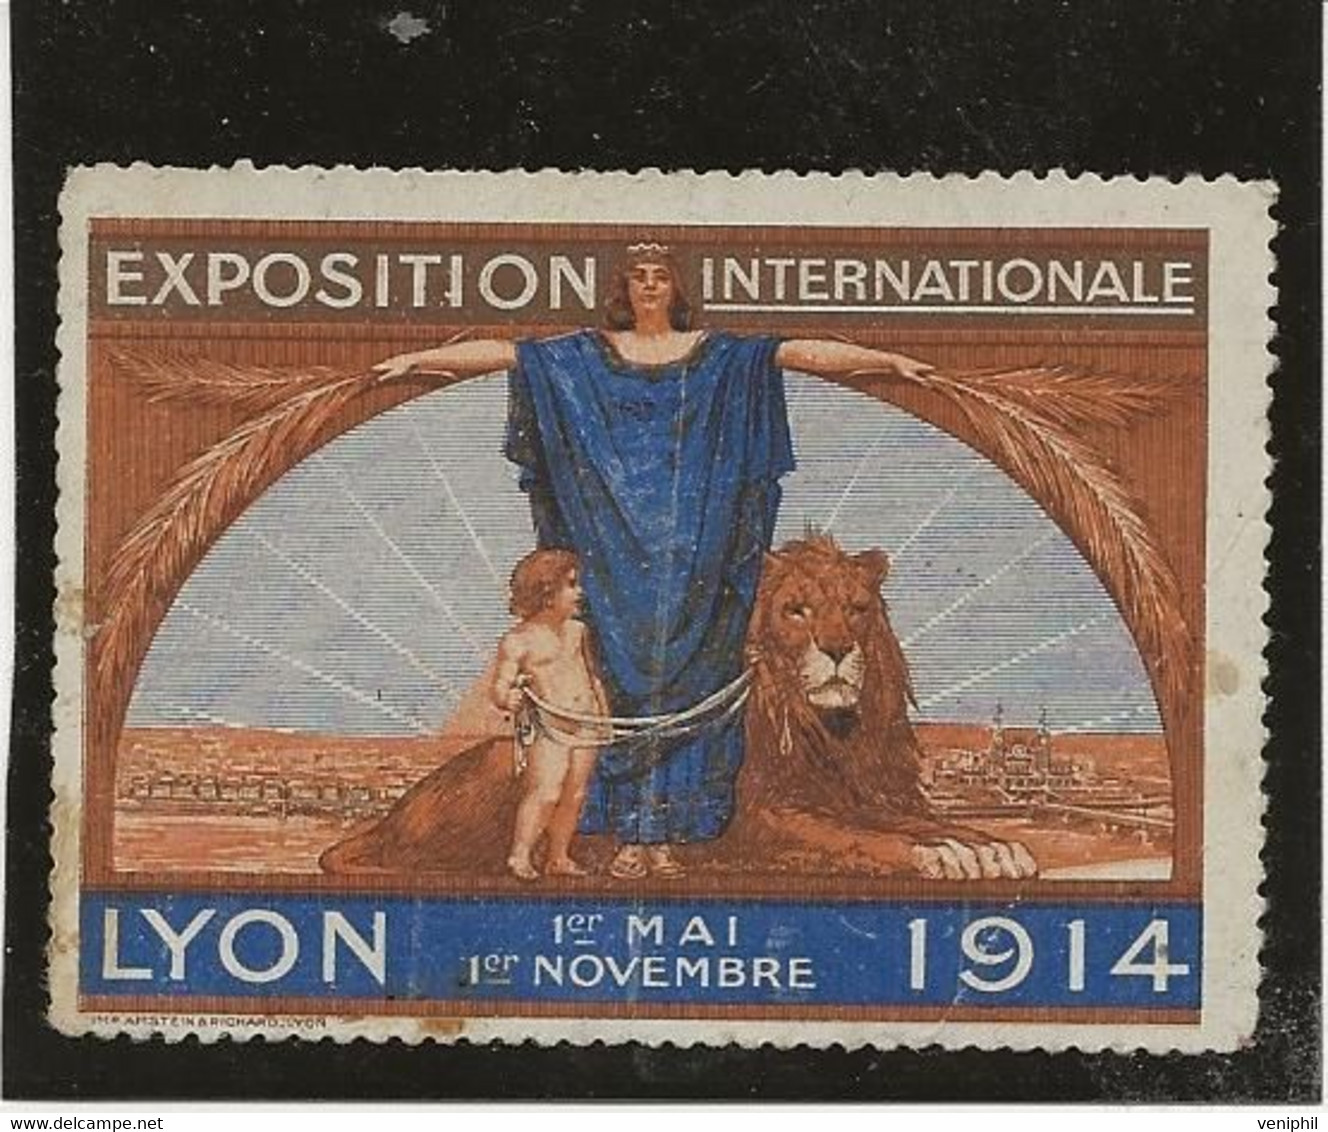 VIGNETTE EXPOSITION INTERNATIONALE LYON  1ER MAI -1ER NOVEMBRE - 1914 - Turismo (Viñetas)